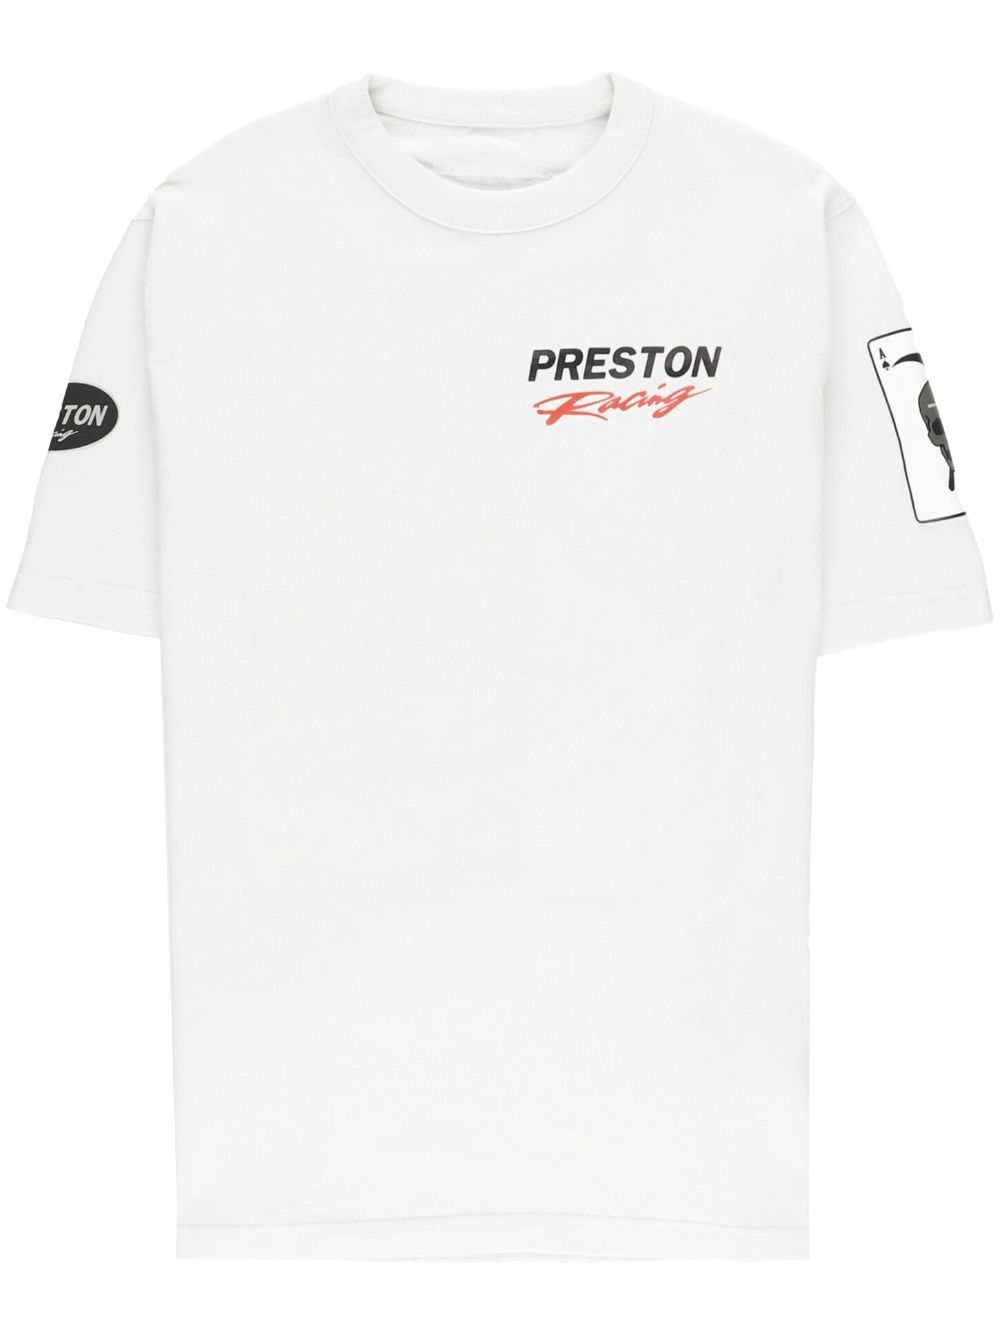 HERON PRESTON RACING LOGO-PRINT T-SHIRT